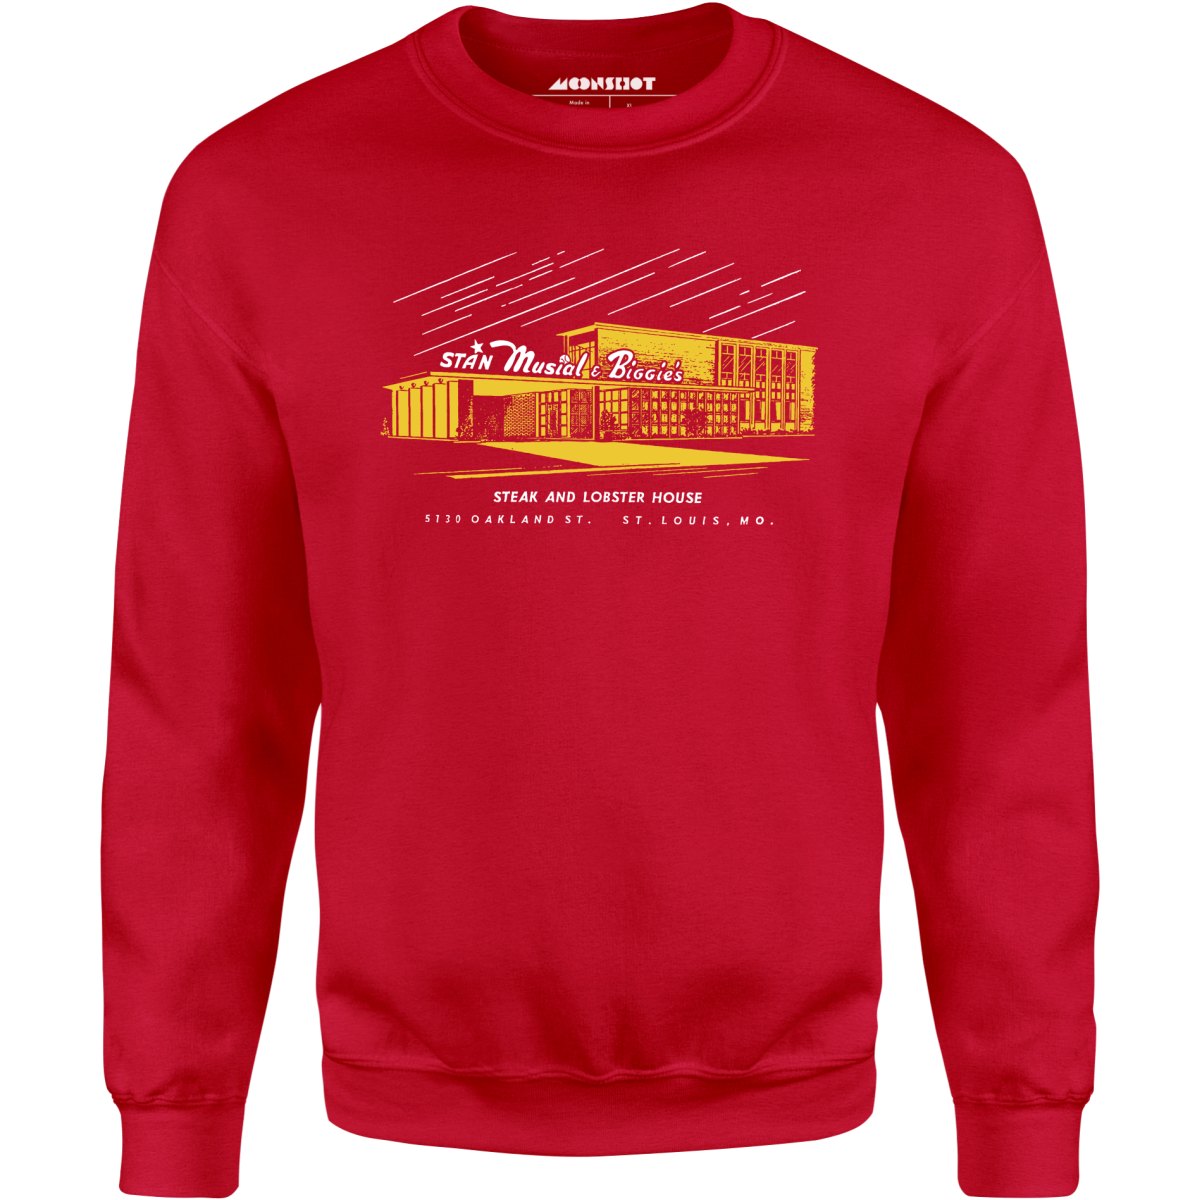 Stan Musial & Biggie's - St. Louis, MO - Vintage Restaurant - Unisex Sweatshirt